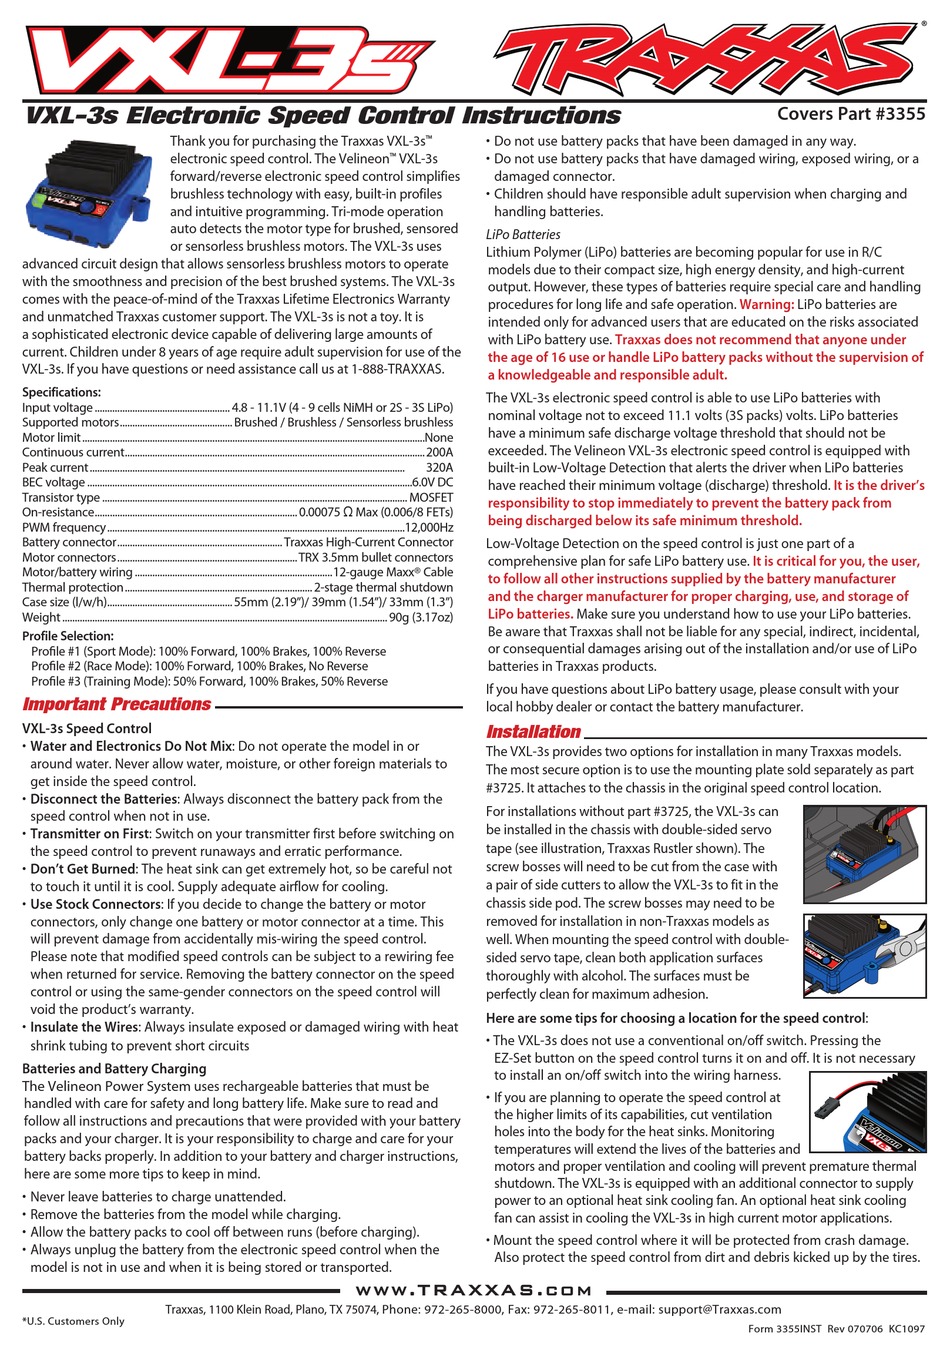 TRAXXAS VXL-3S INSTRUCTIONS Pdf Download | ManualsLib